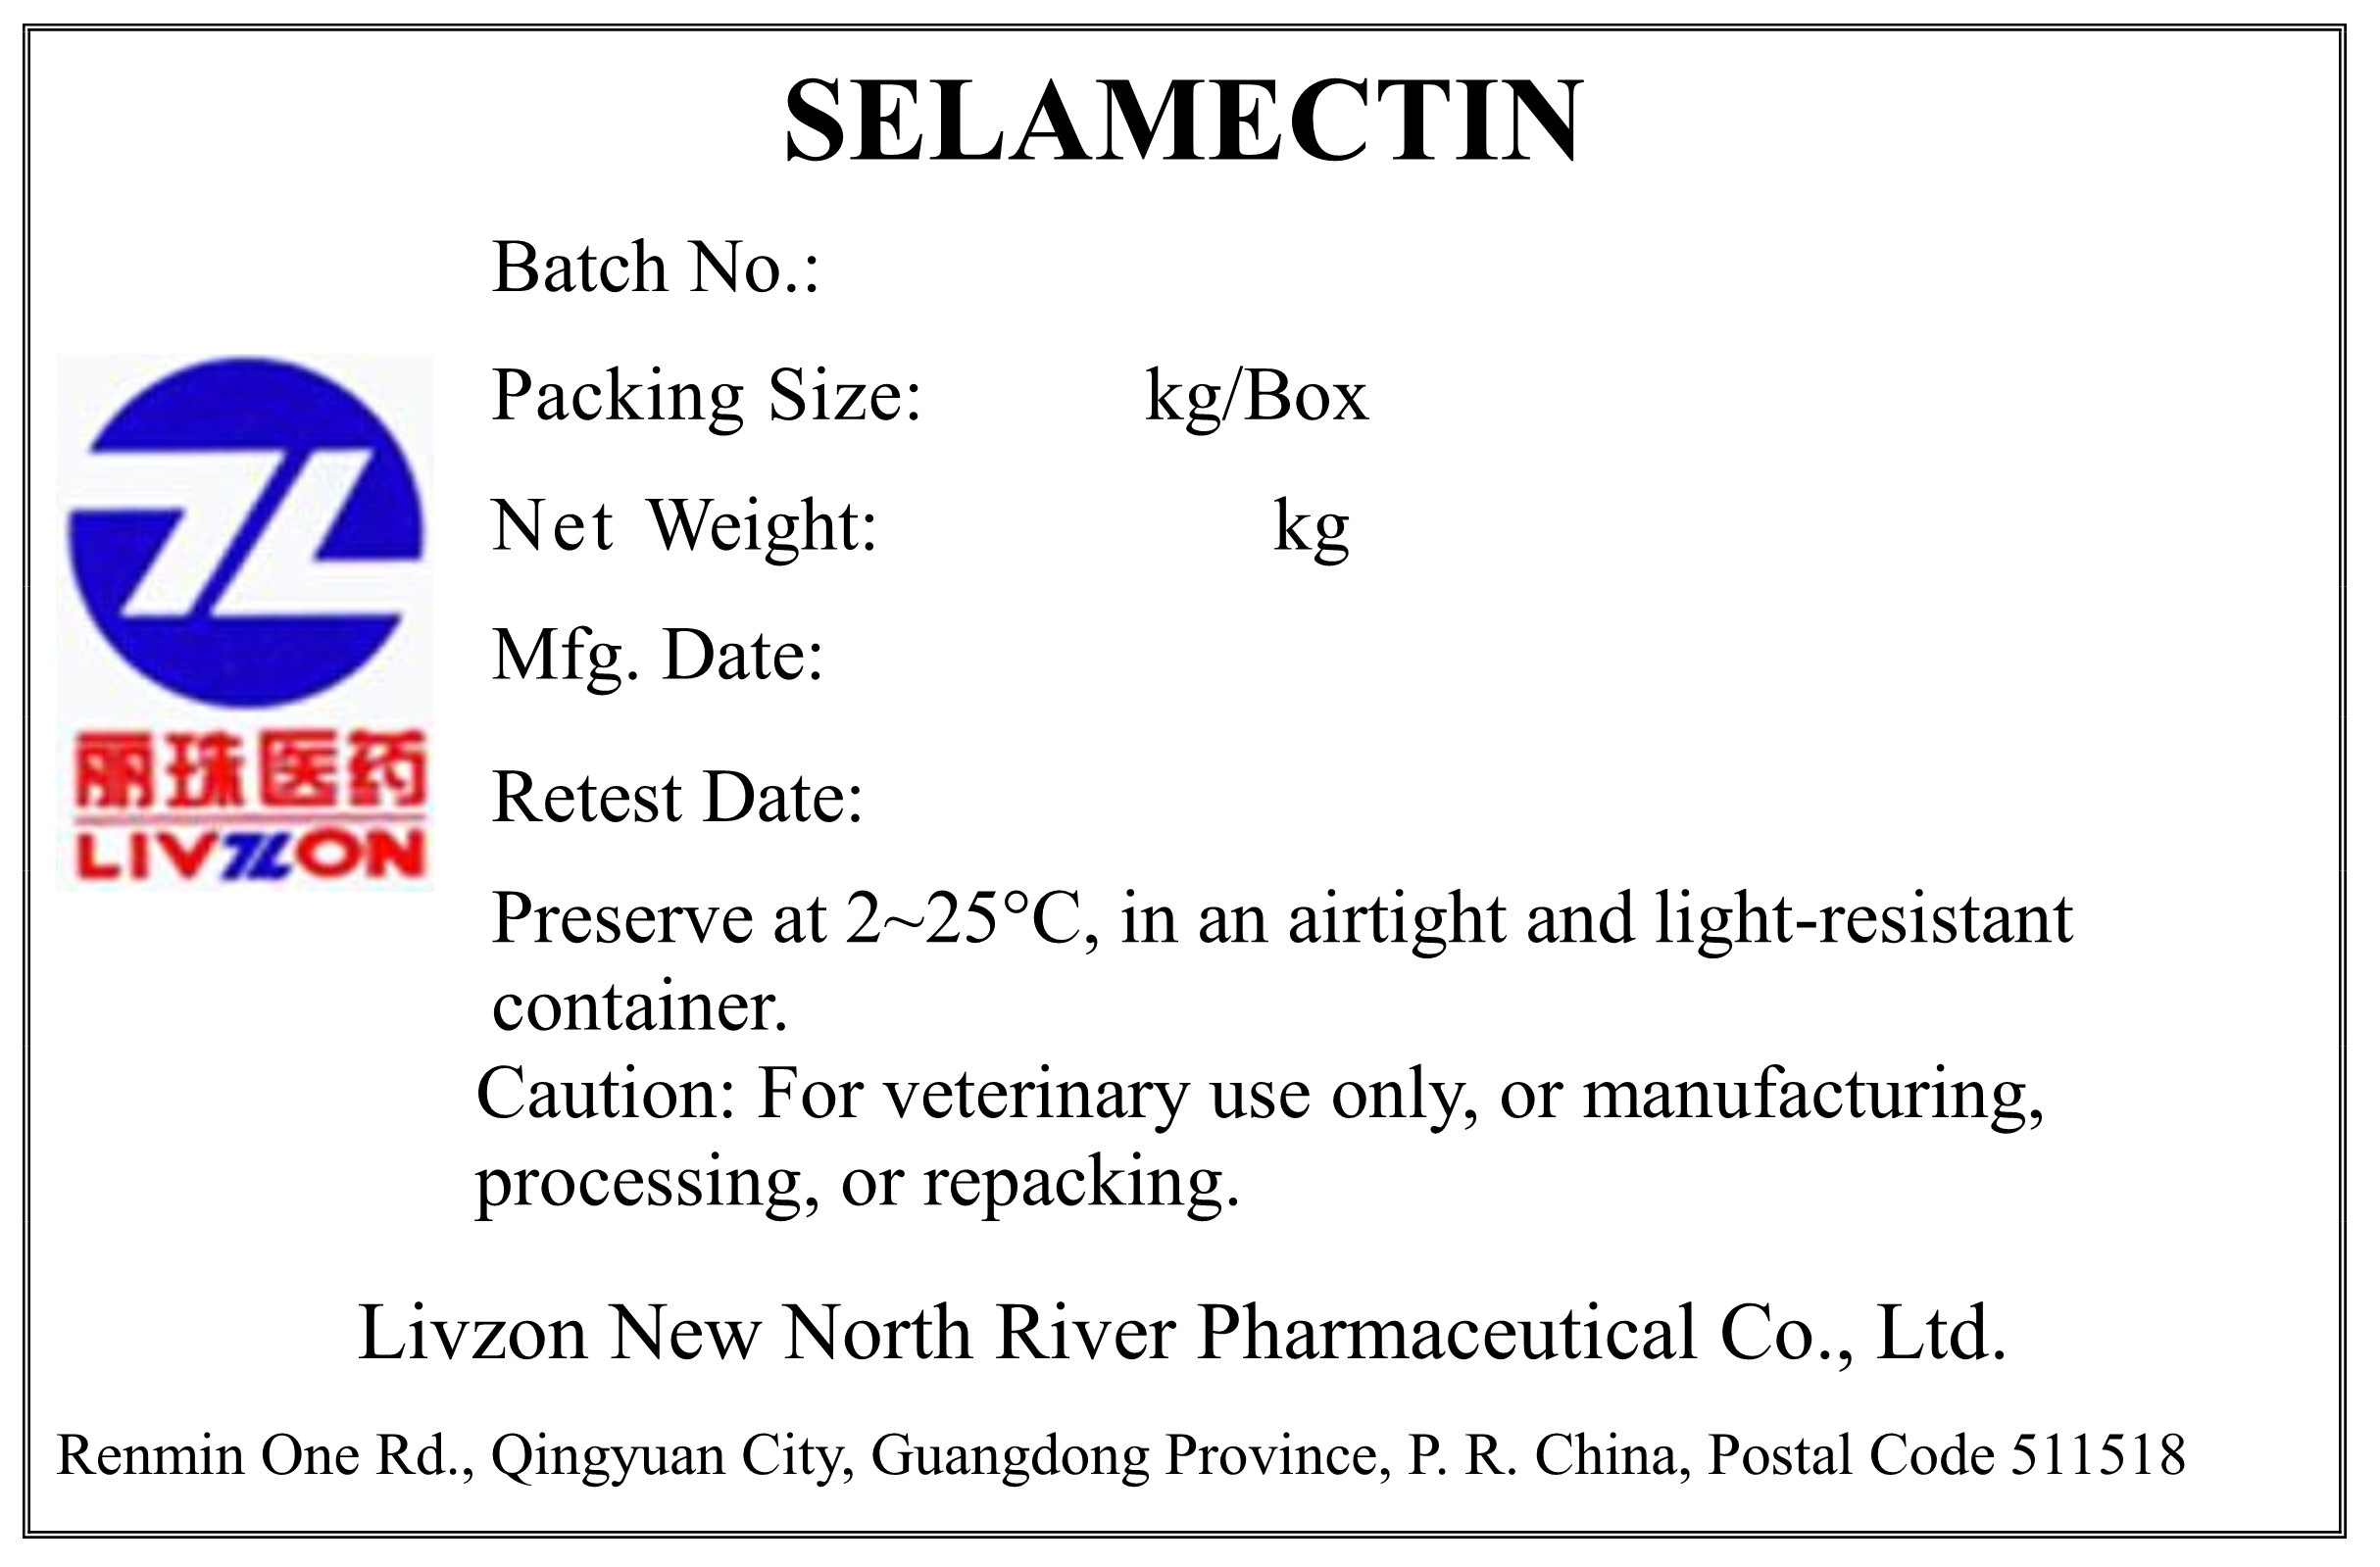 Selamectin label